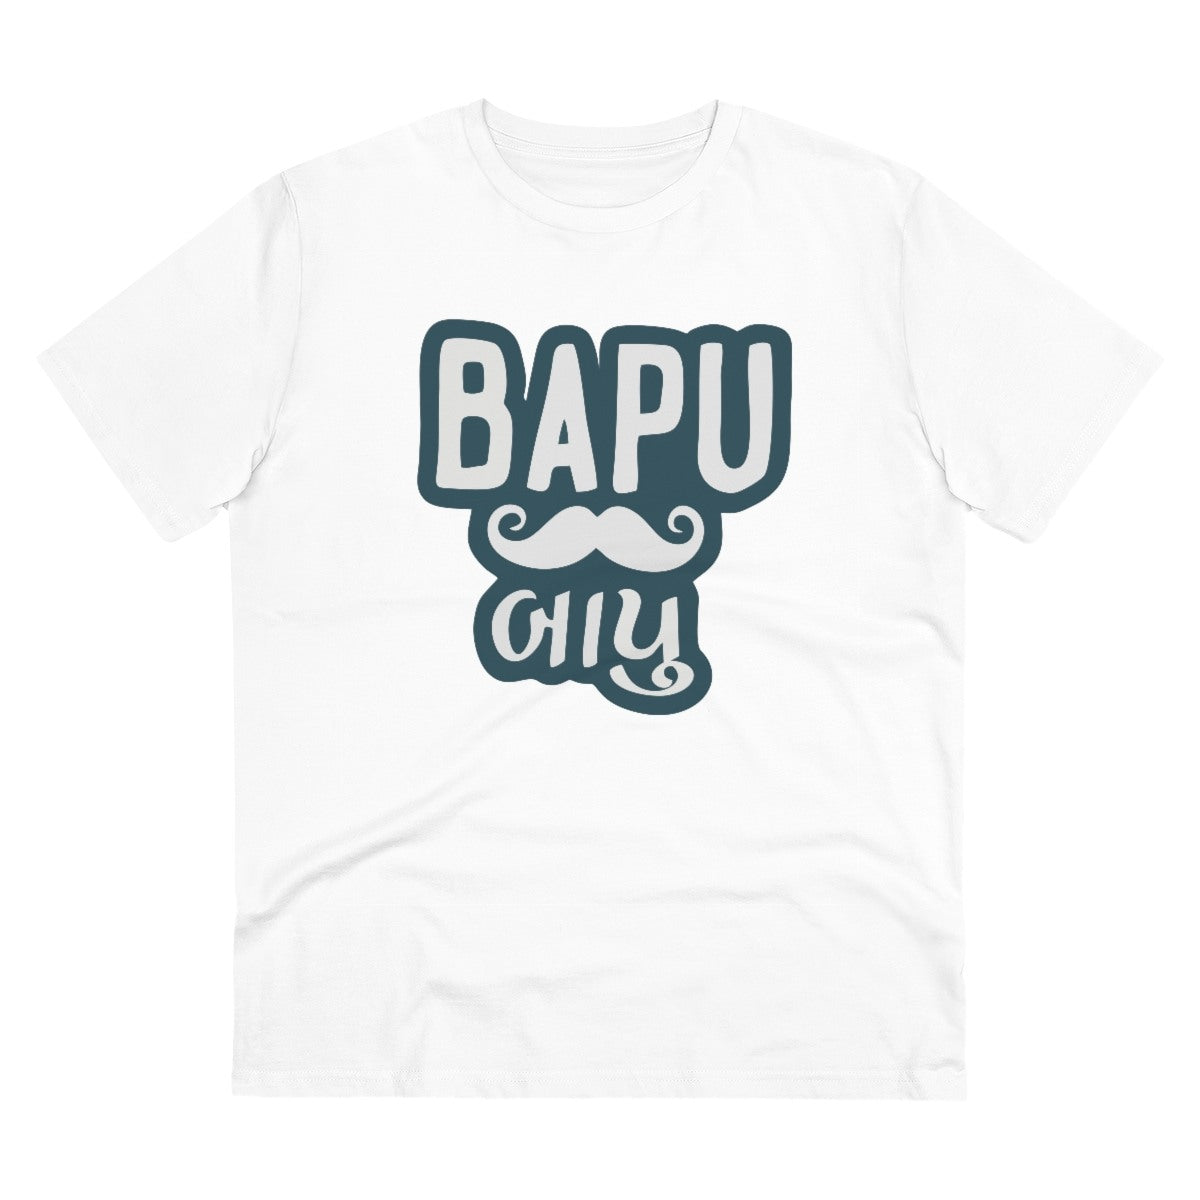 Men's PC Cotton Baapu Printed T Shirt (Color: White, Thread Count: 180GSM) - GillKart